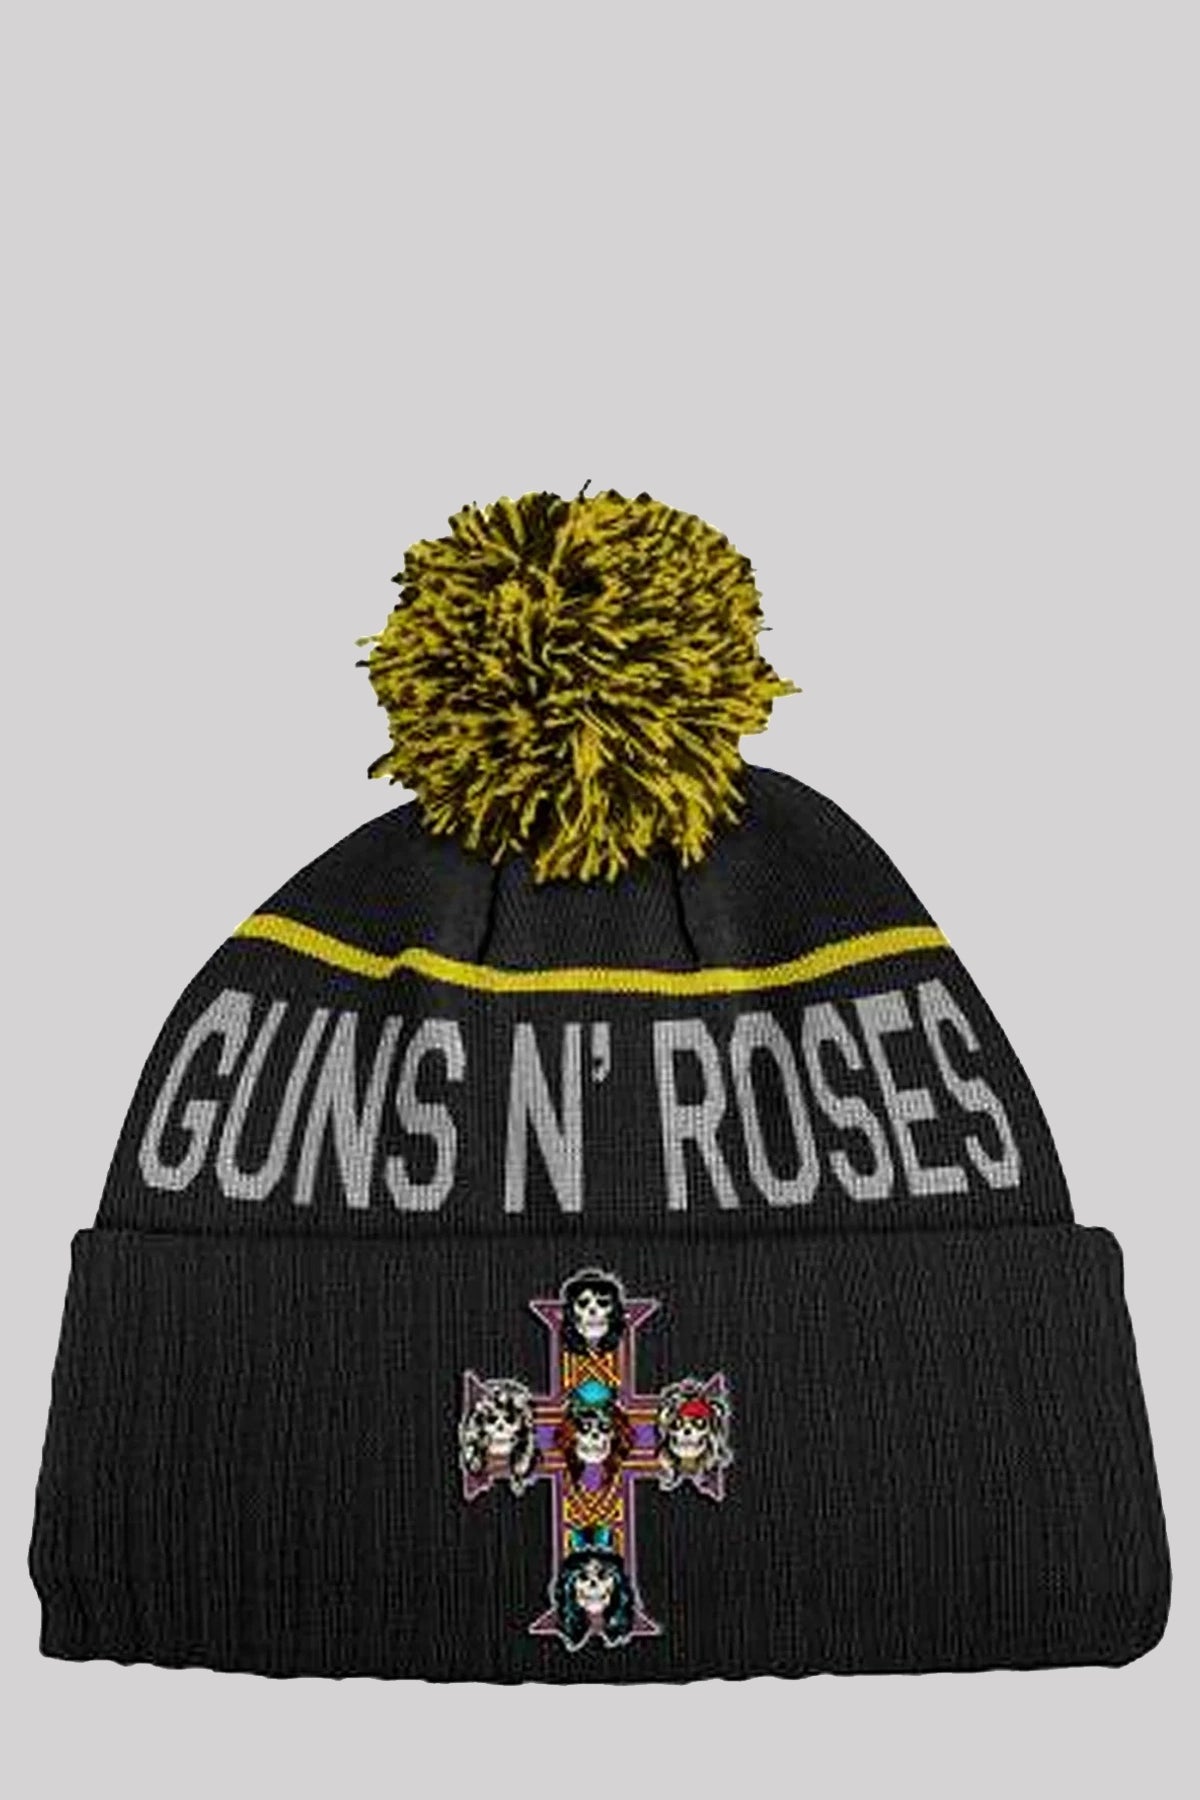 Guns N' Roses Unisex Bobble Beanie Hat: Cross Official Merch